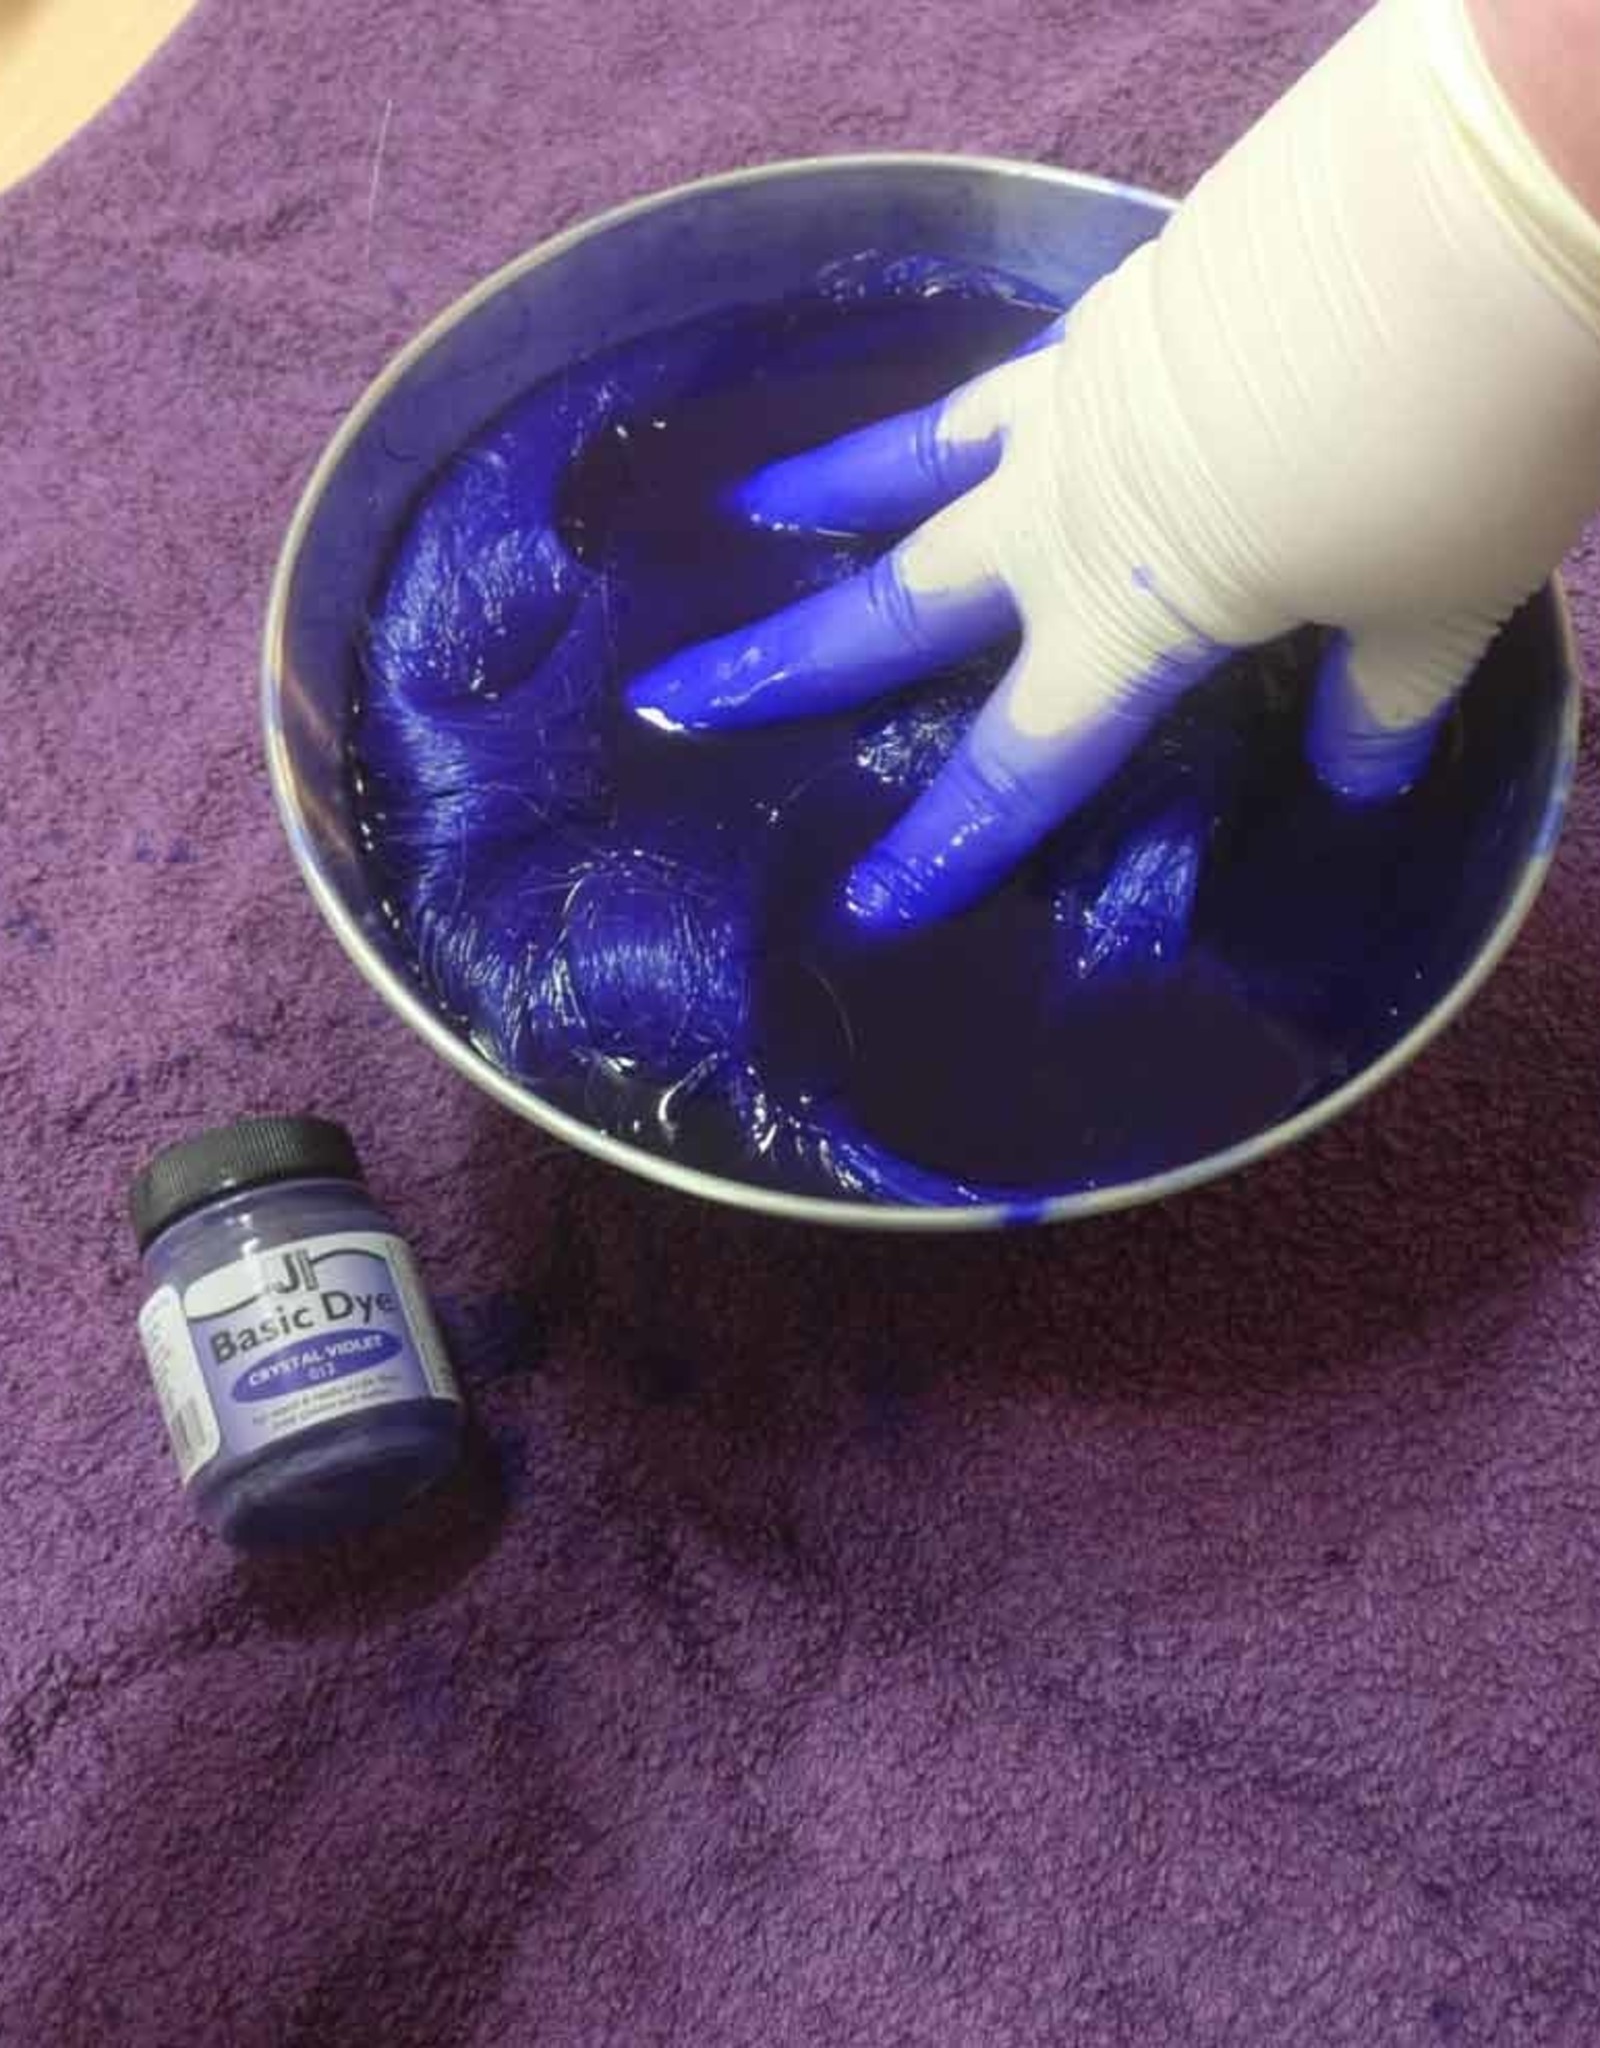 Jacquard Jacquard Basic Dye  Violet Cristallisé